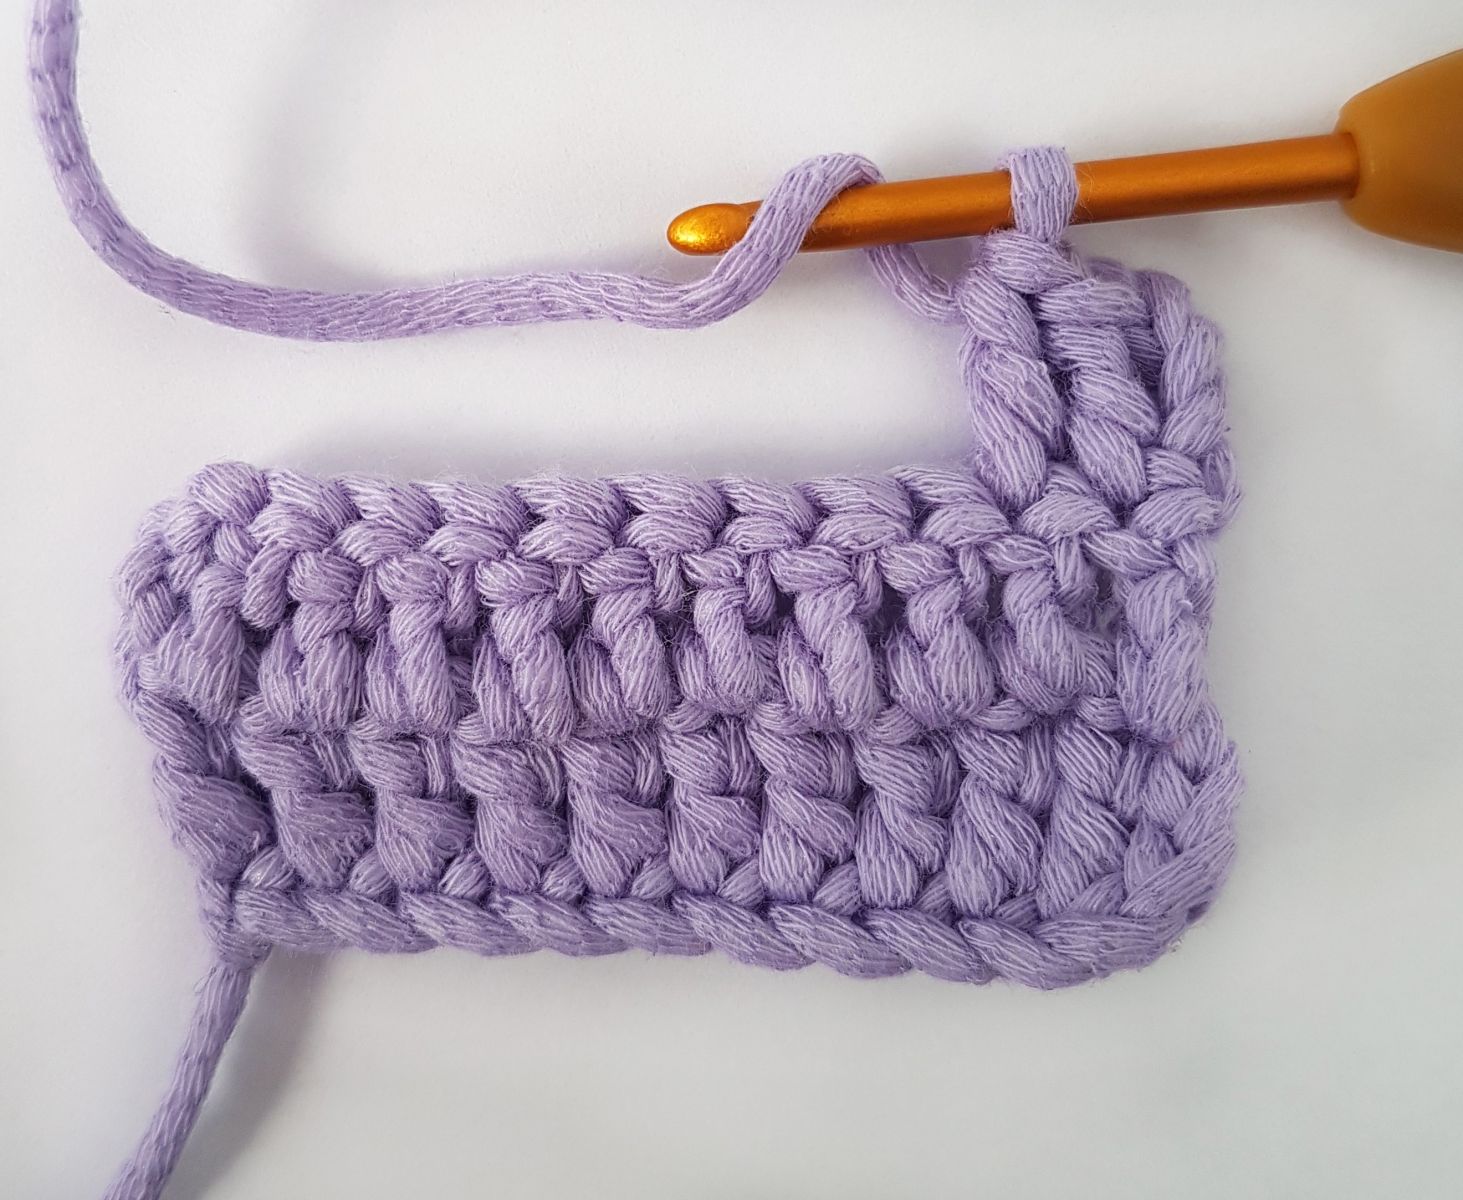 Crochet double crochet (half double crochet UK) together = Decrease with double crochet